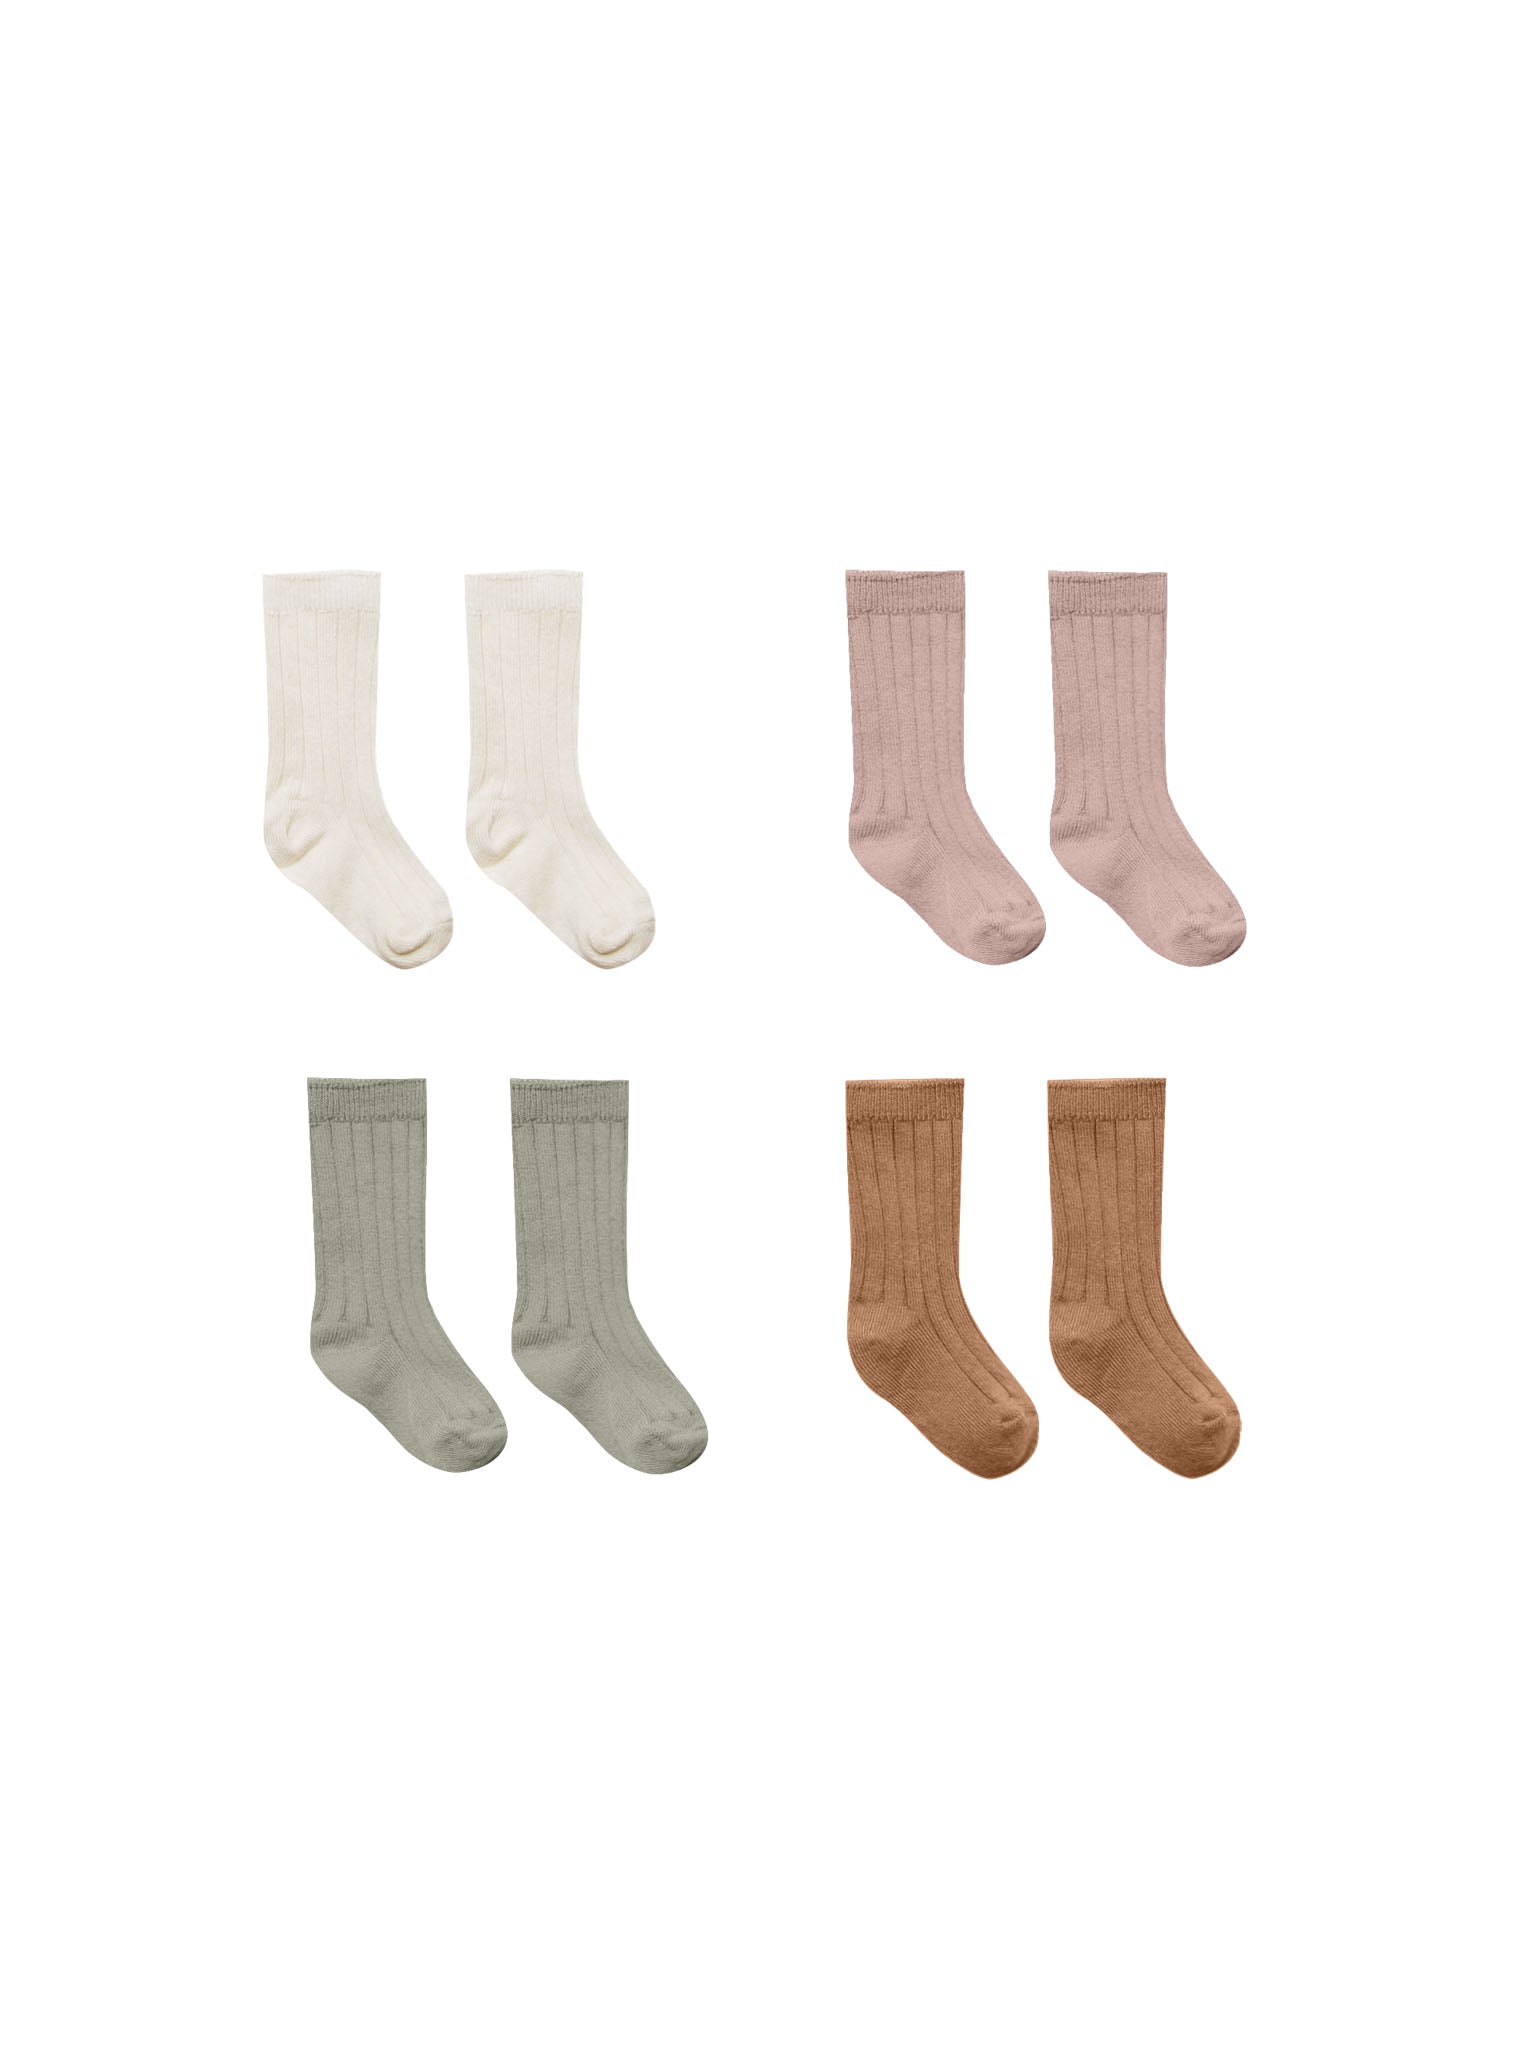 Socks, Set of 4 | Natural, Mauve, Basil, Cinnamon